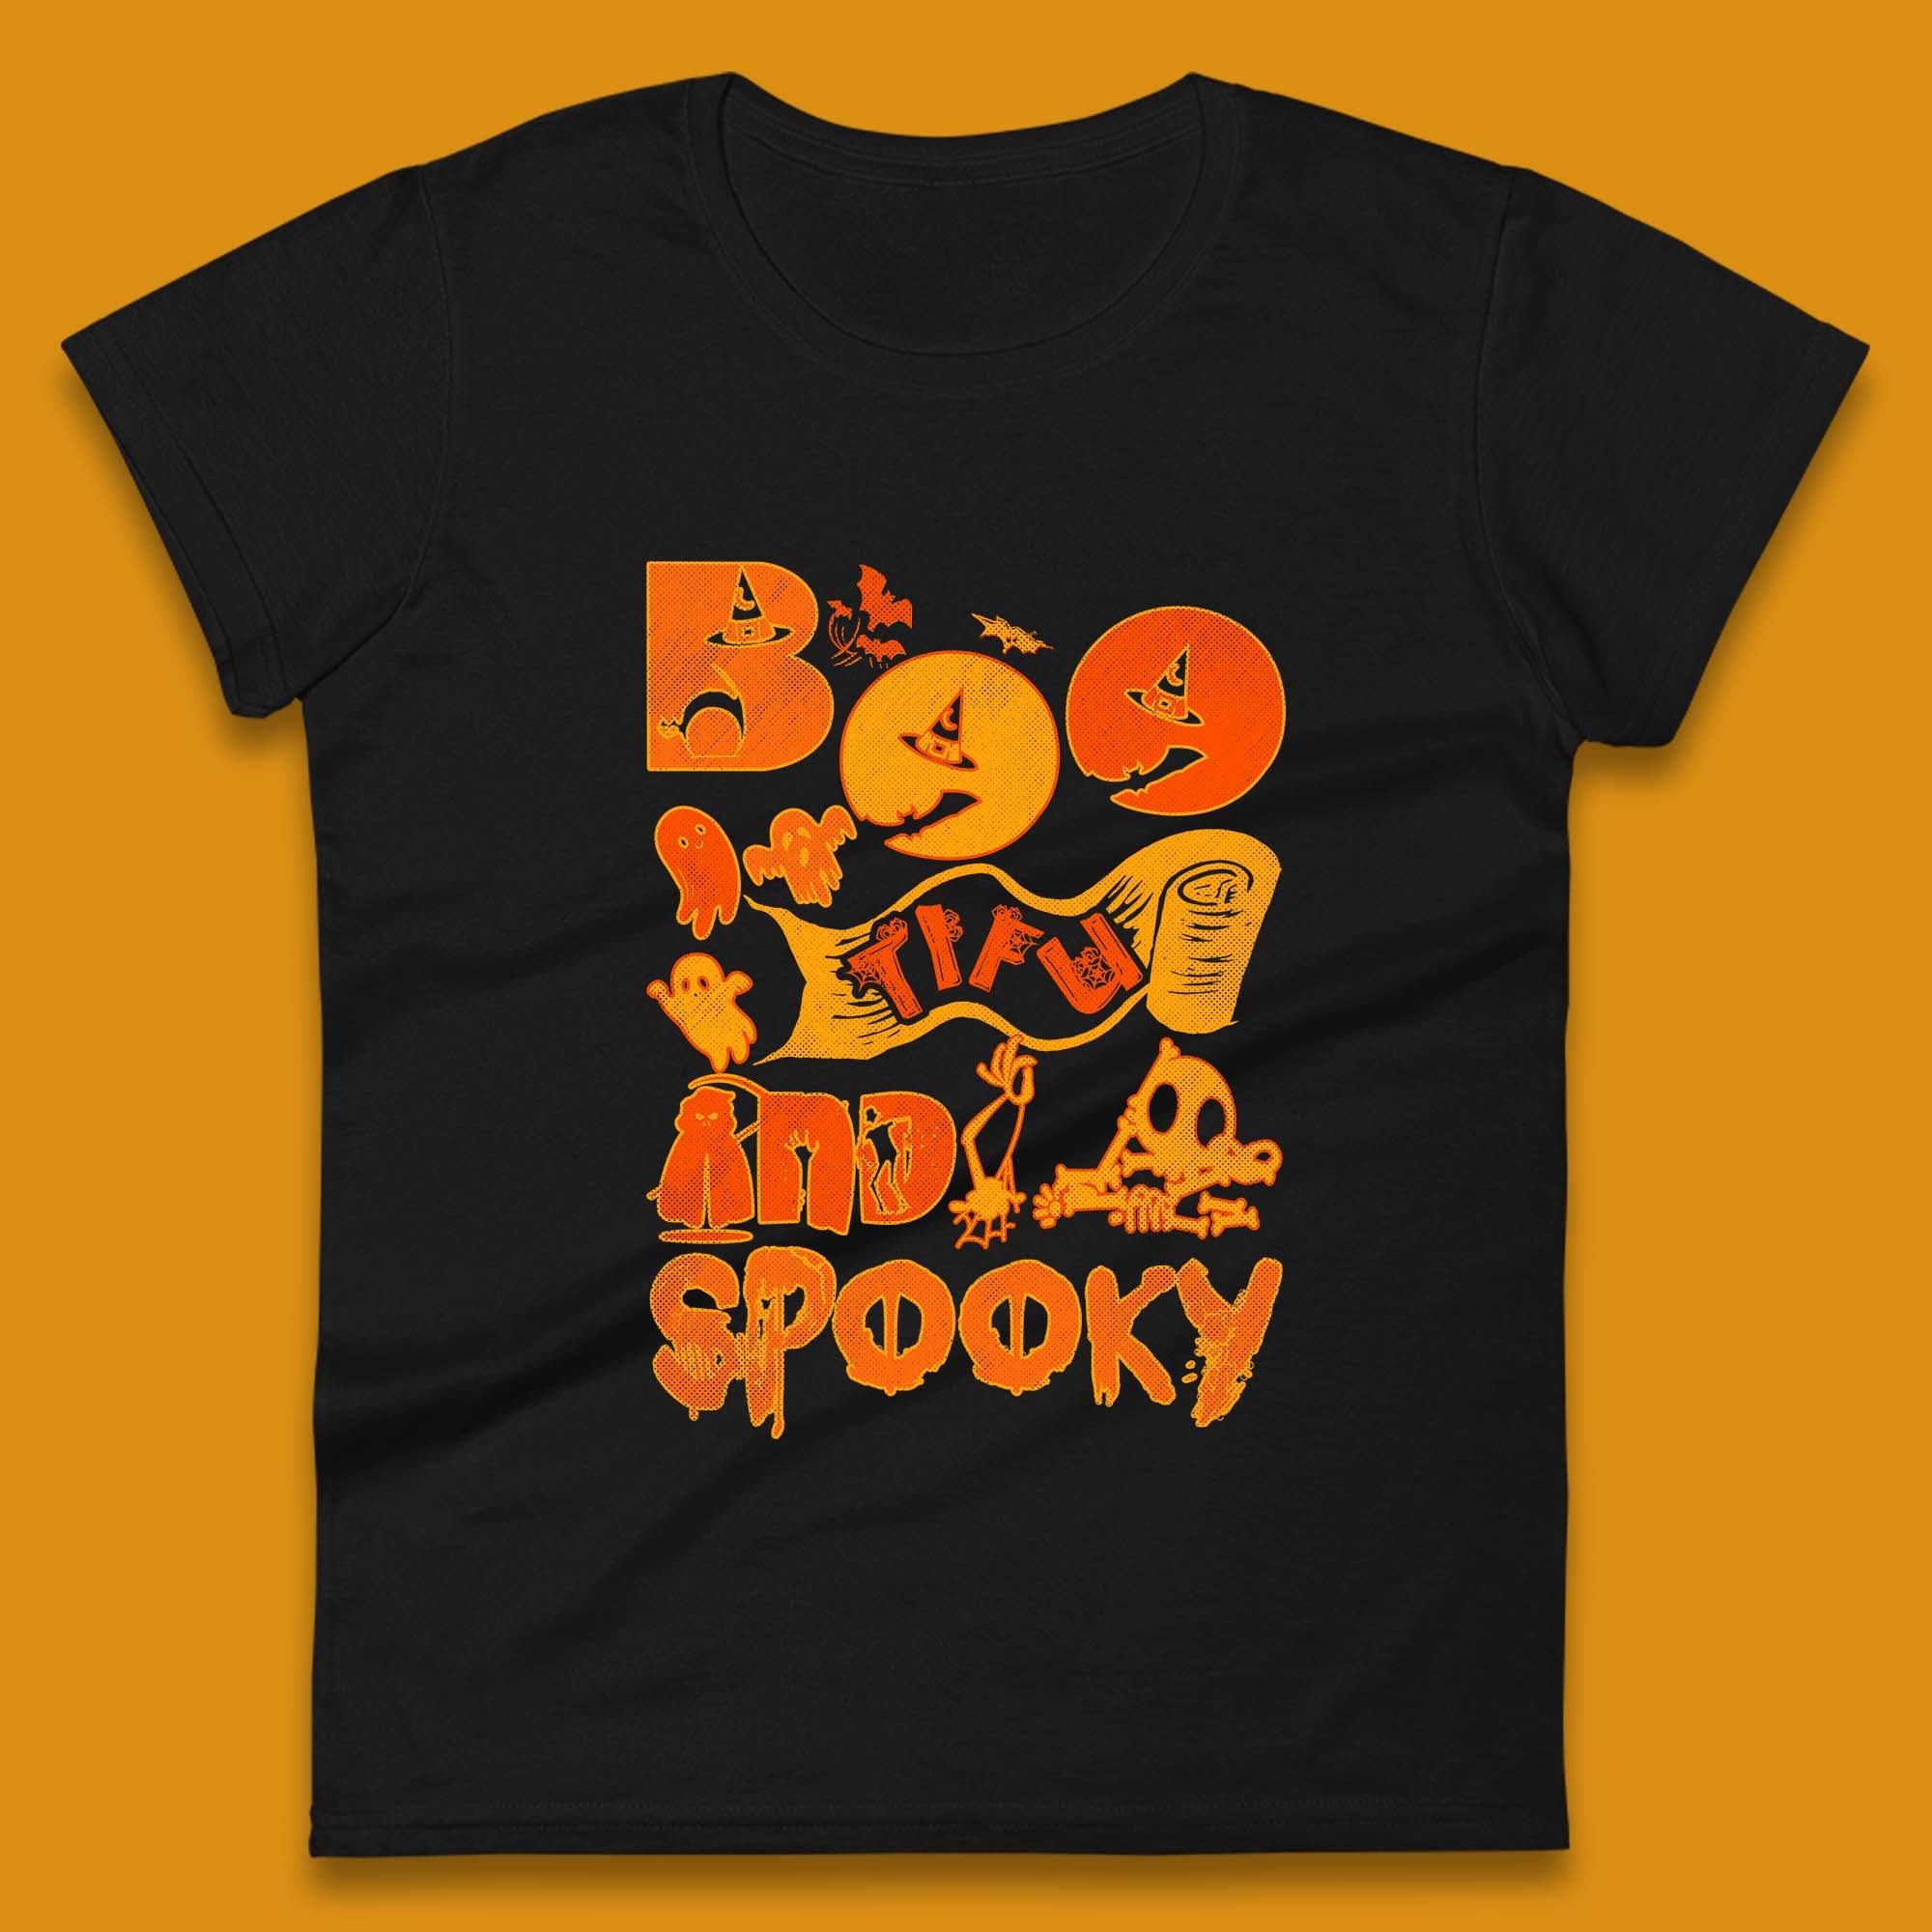 Boo Tiful and Spooky Halloween Horror Scary Boo Ghost Spooky Season Womens Tee Top